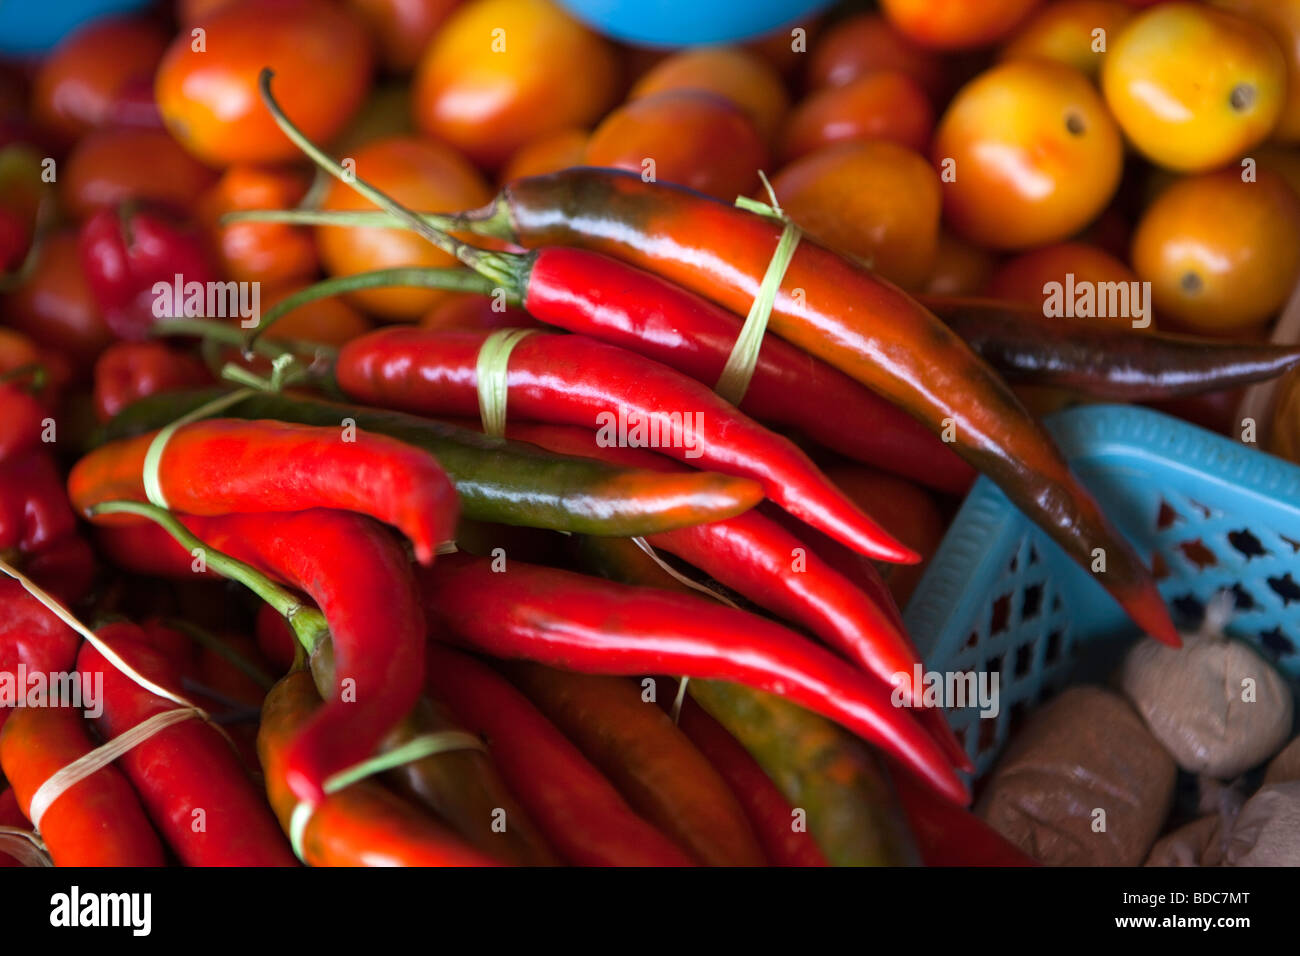 Indonesia Sulawesi Tana Toraja Rantepao daily market bundles of fresh locally grown hot chillis Stock Photo